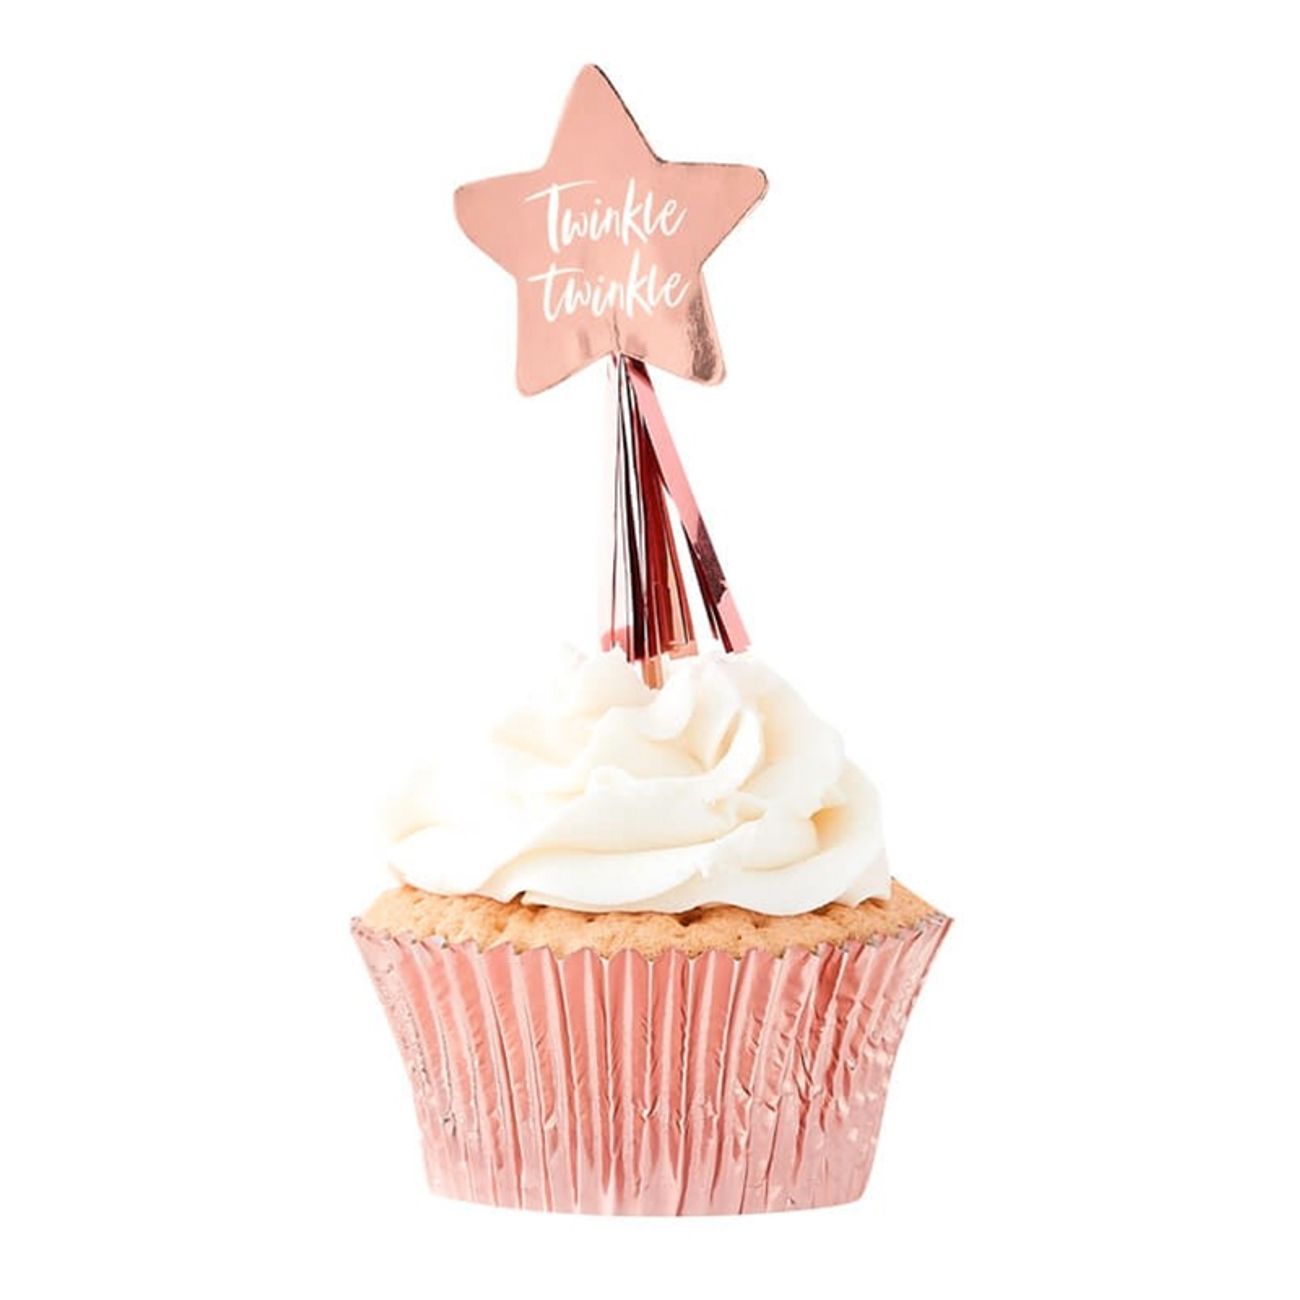 cupcake-dekoration-roseguld-twinkle-1